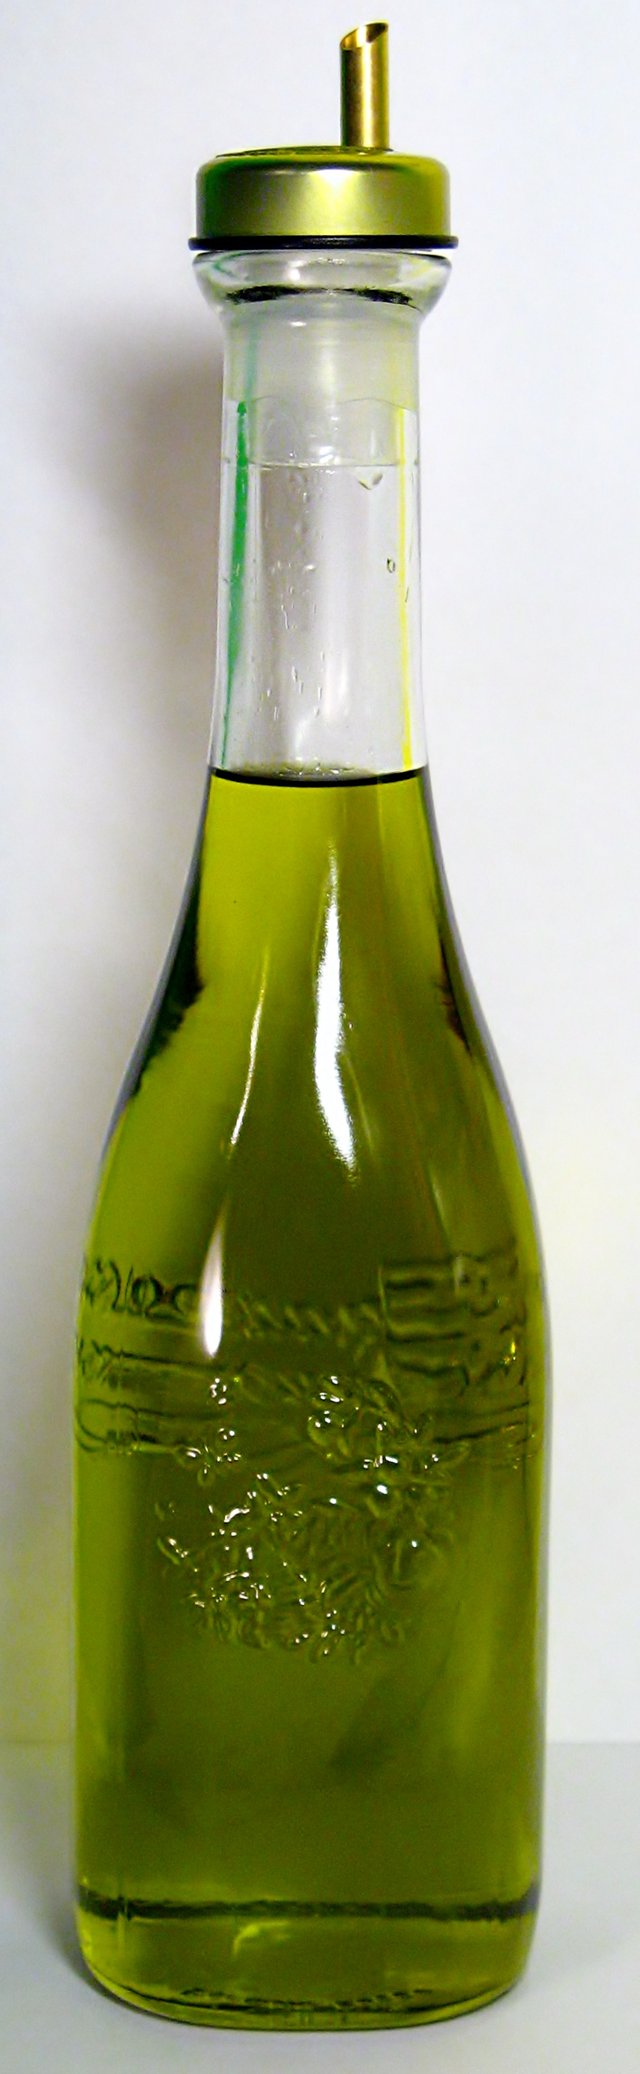 A bottle of Italian olive oil